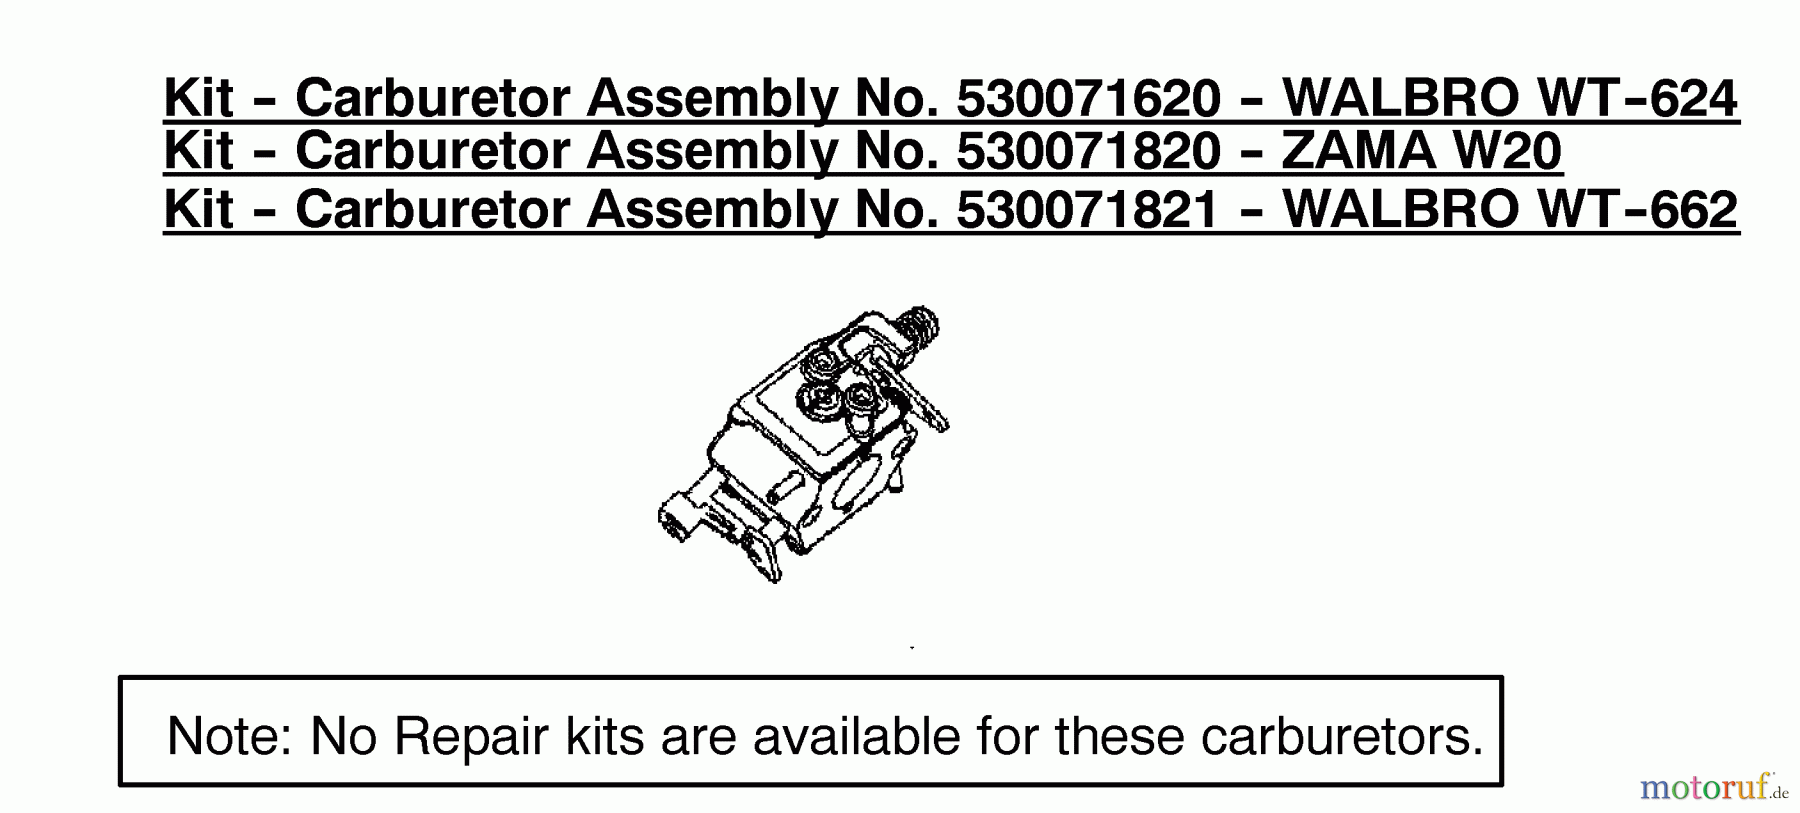  Poulan / Weed Eater Motorsägen 2055 (Type 2) - Poulan Woodsman Chainsaw Kit - Carburetor Assembly 530071820/530071821/530071620